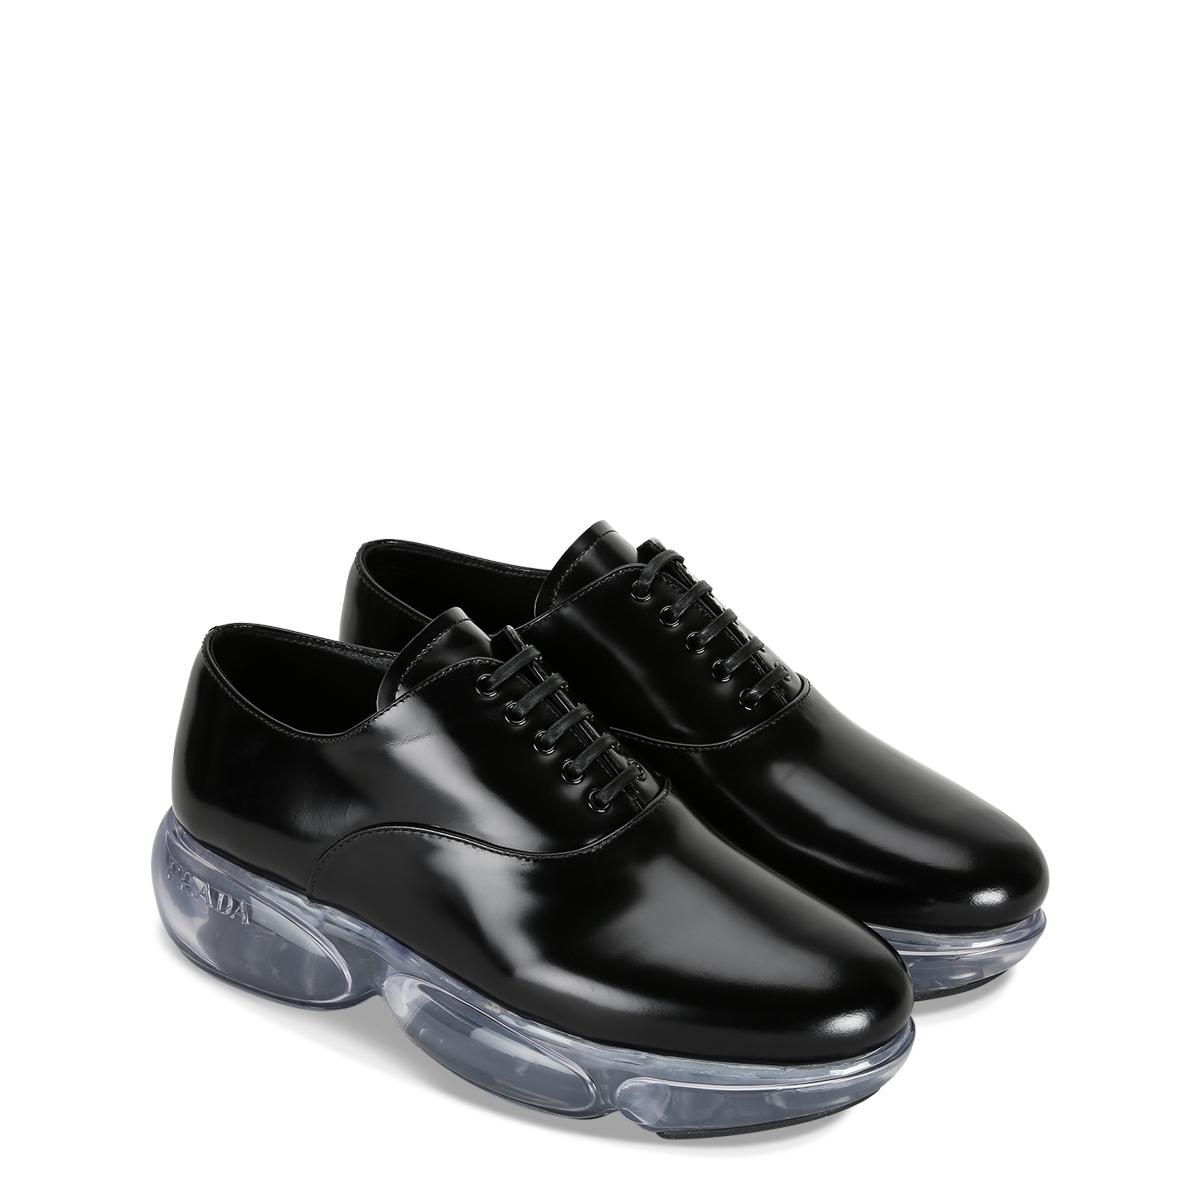 Prada Black Derby Shoe With Transparent Sole | Lyst